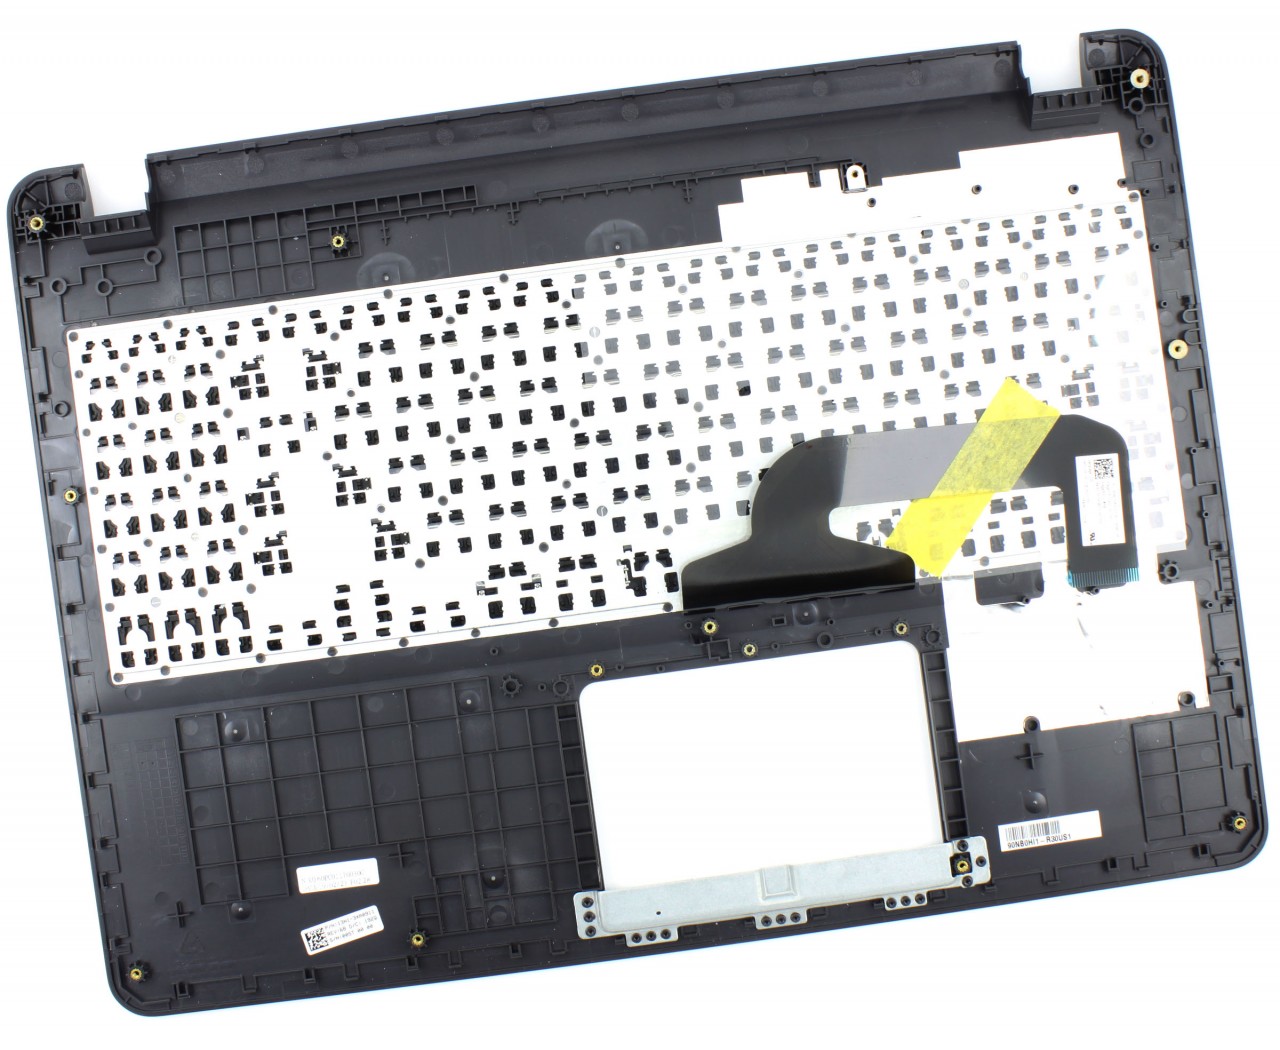 Tastatura Asus F507U Neagra cu Palmrest Gri